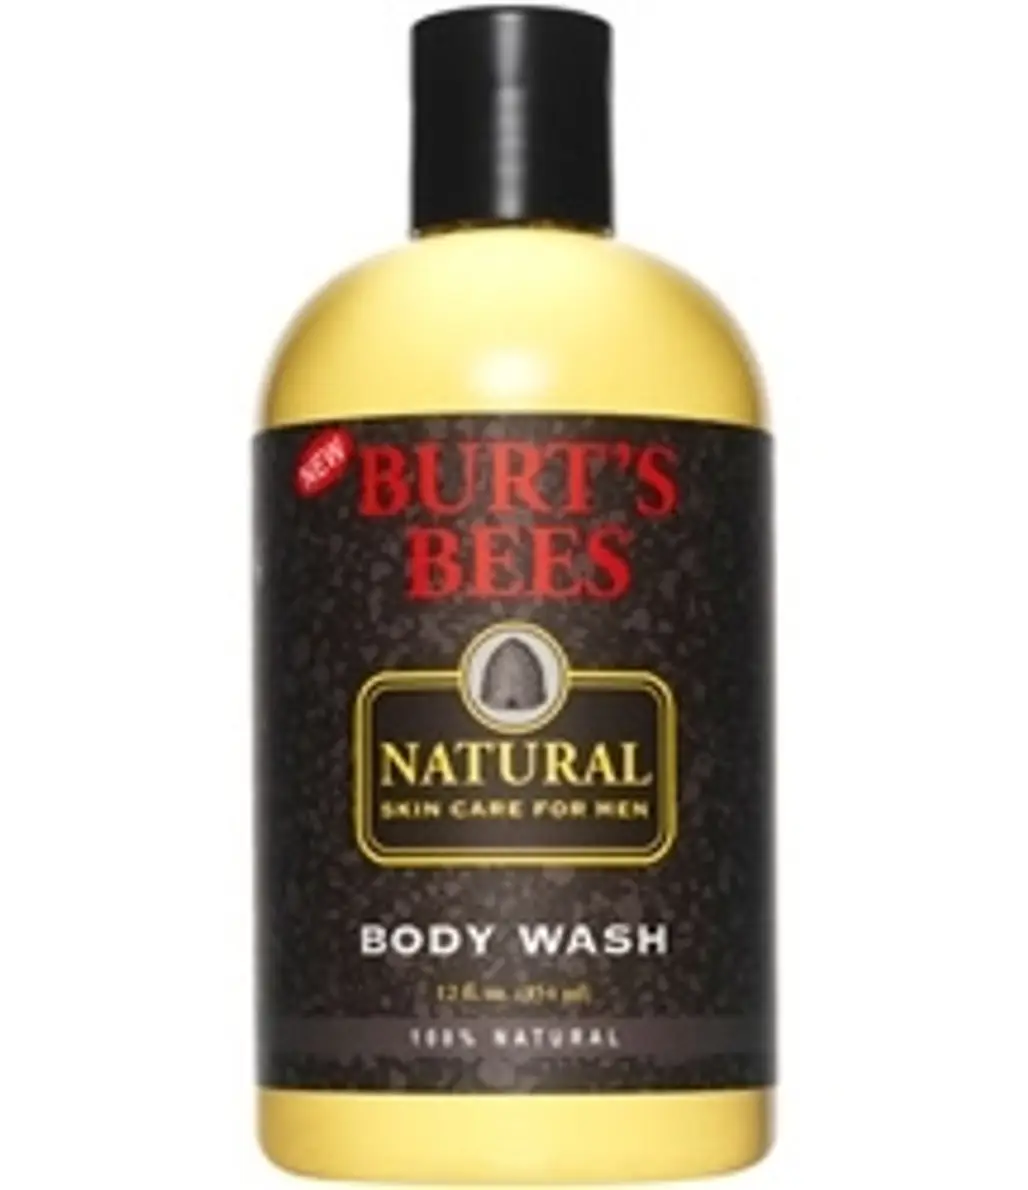 Burt’s Bees Natural Skin Care for Men Body Wash